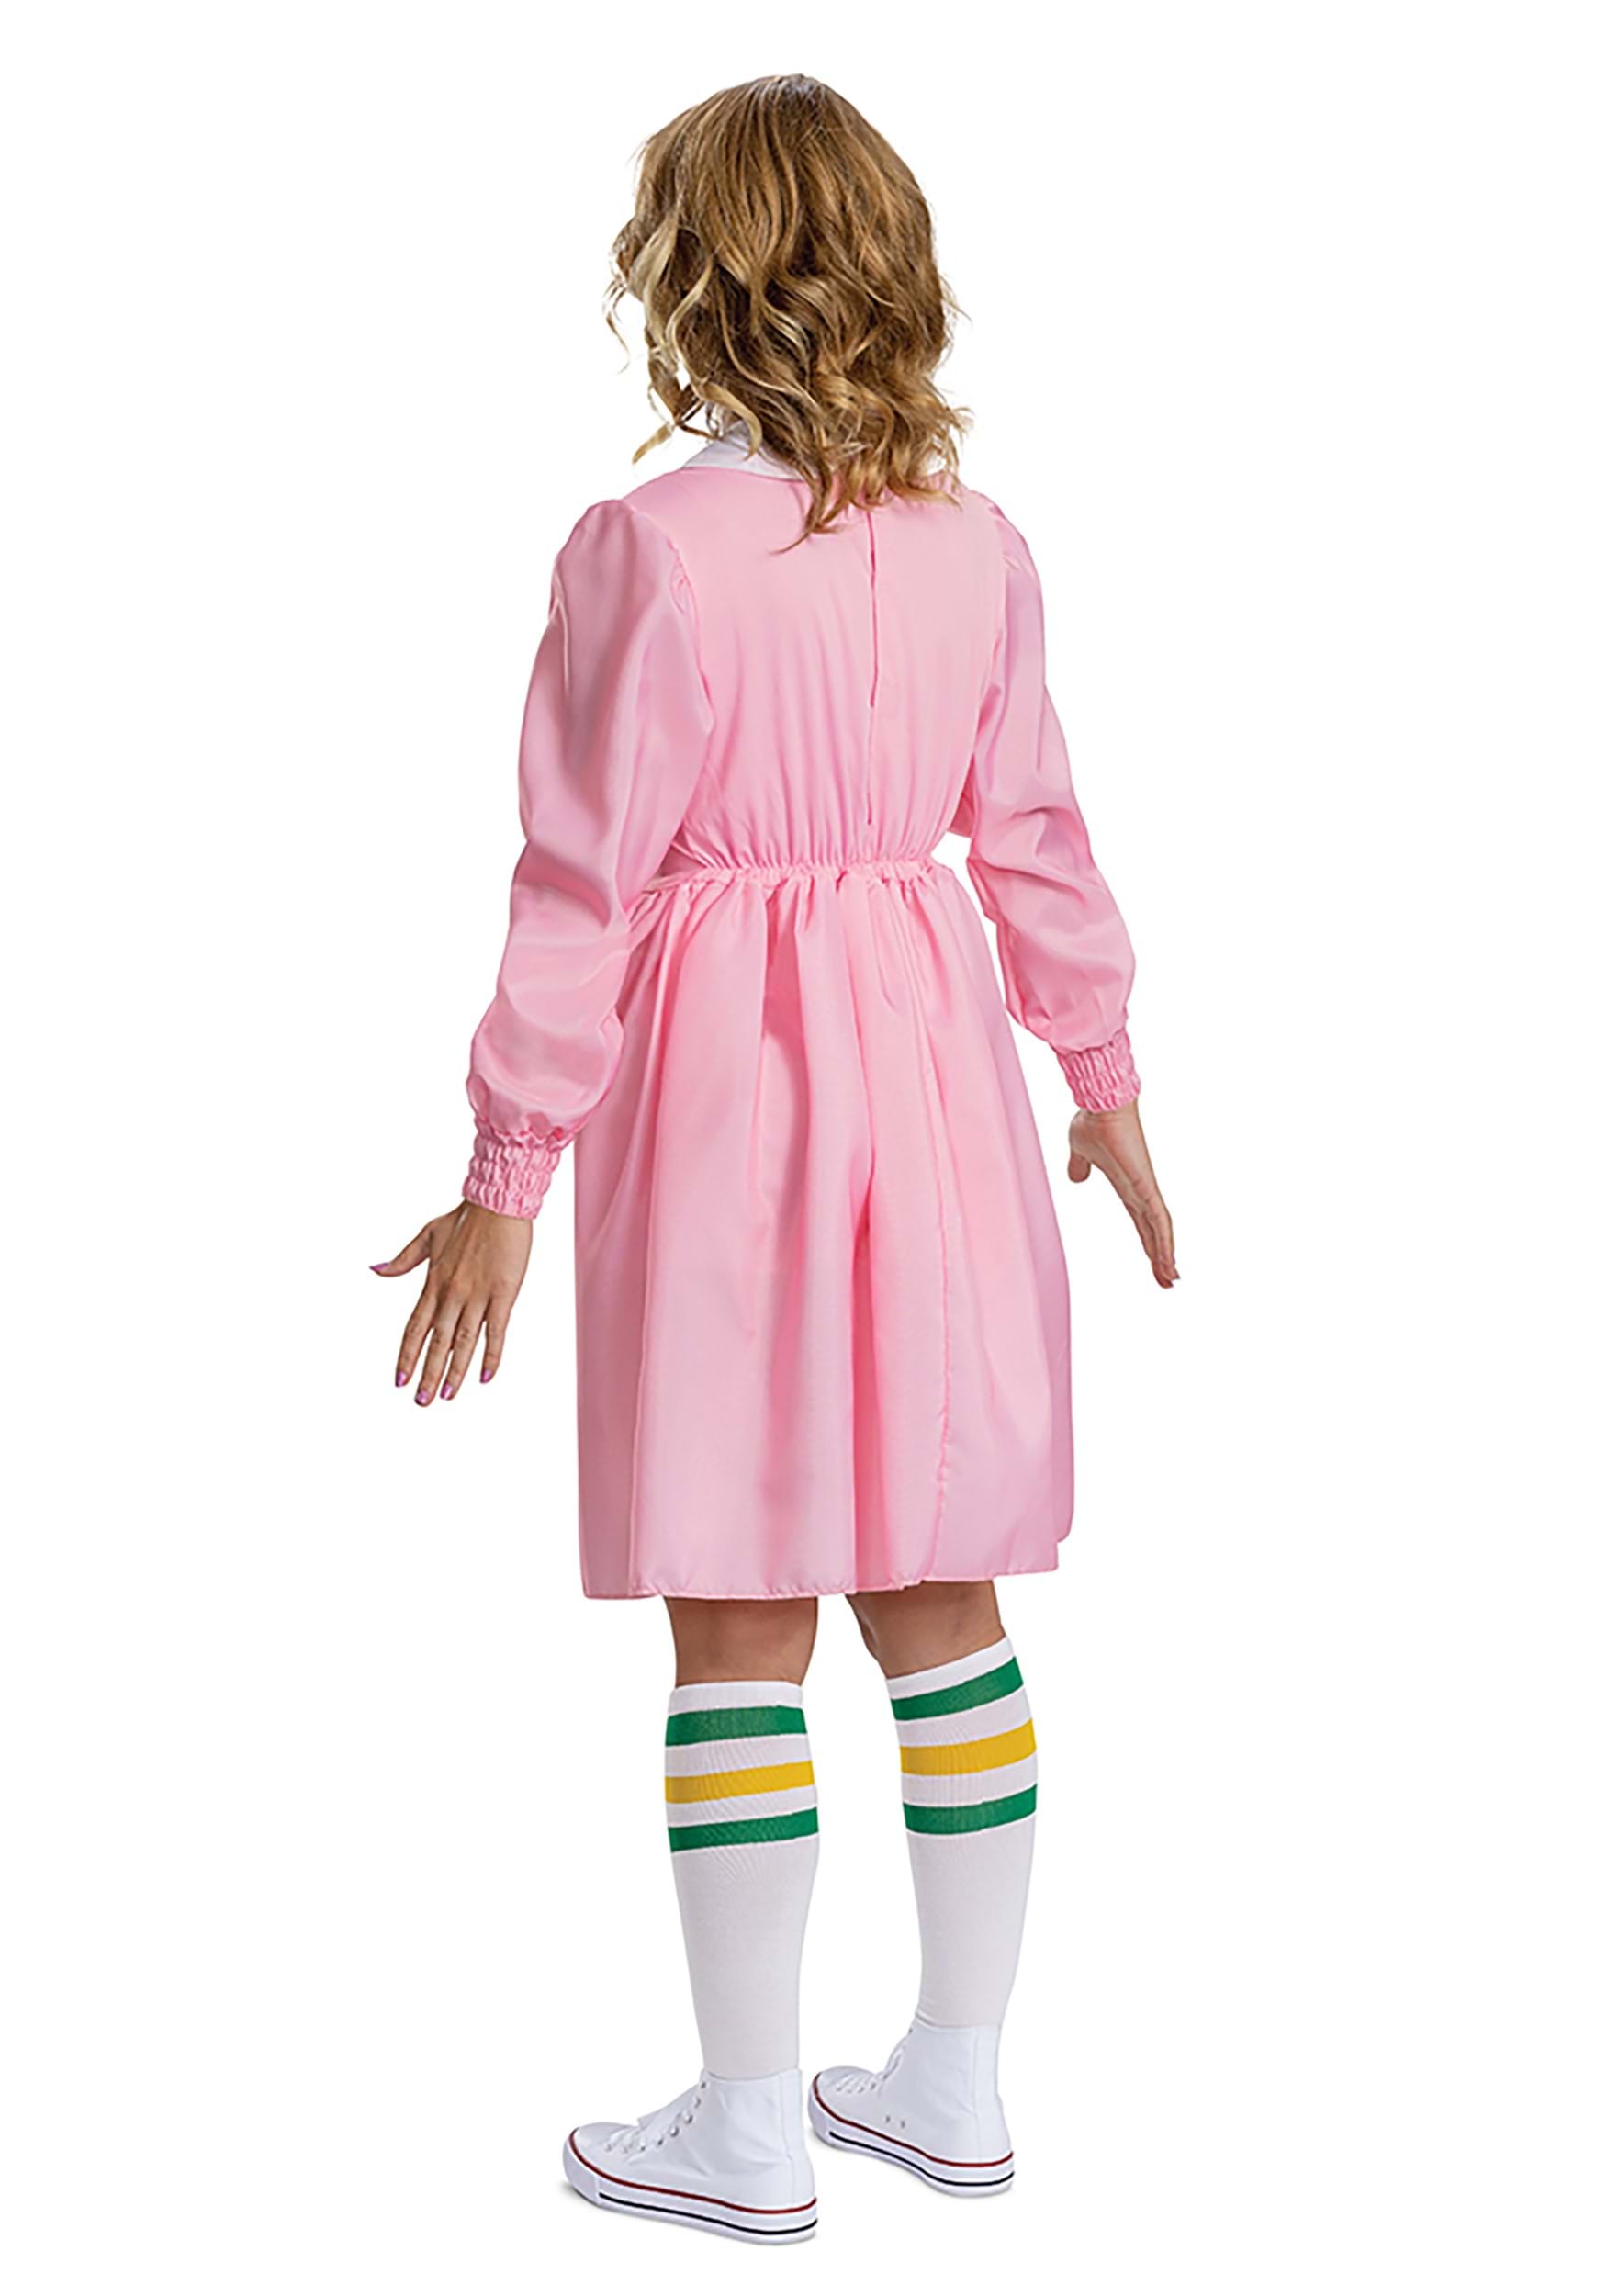 Stranger Things Women's Deluxe Pink Dress Eleven Costume